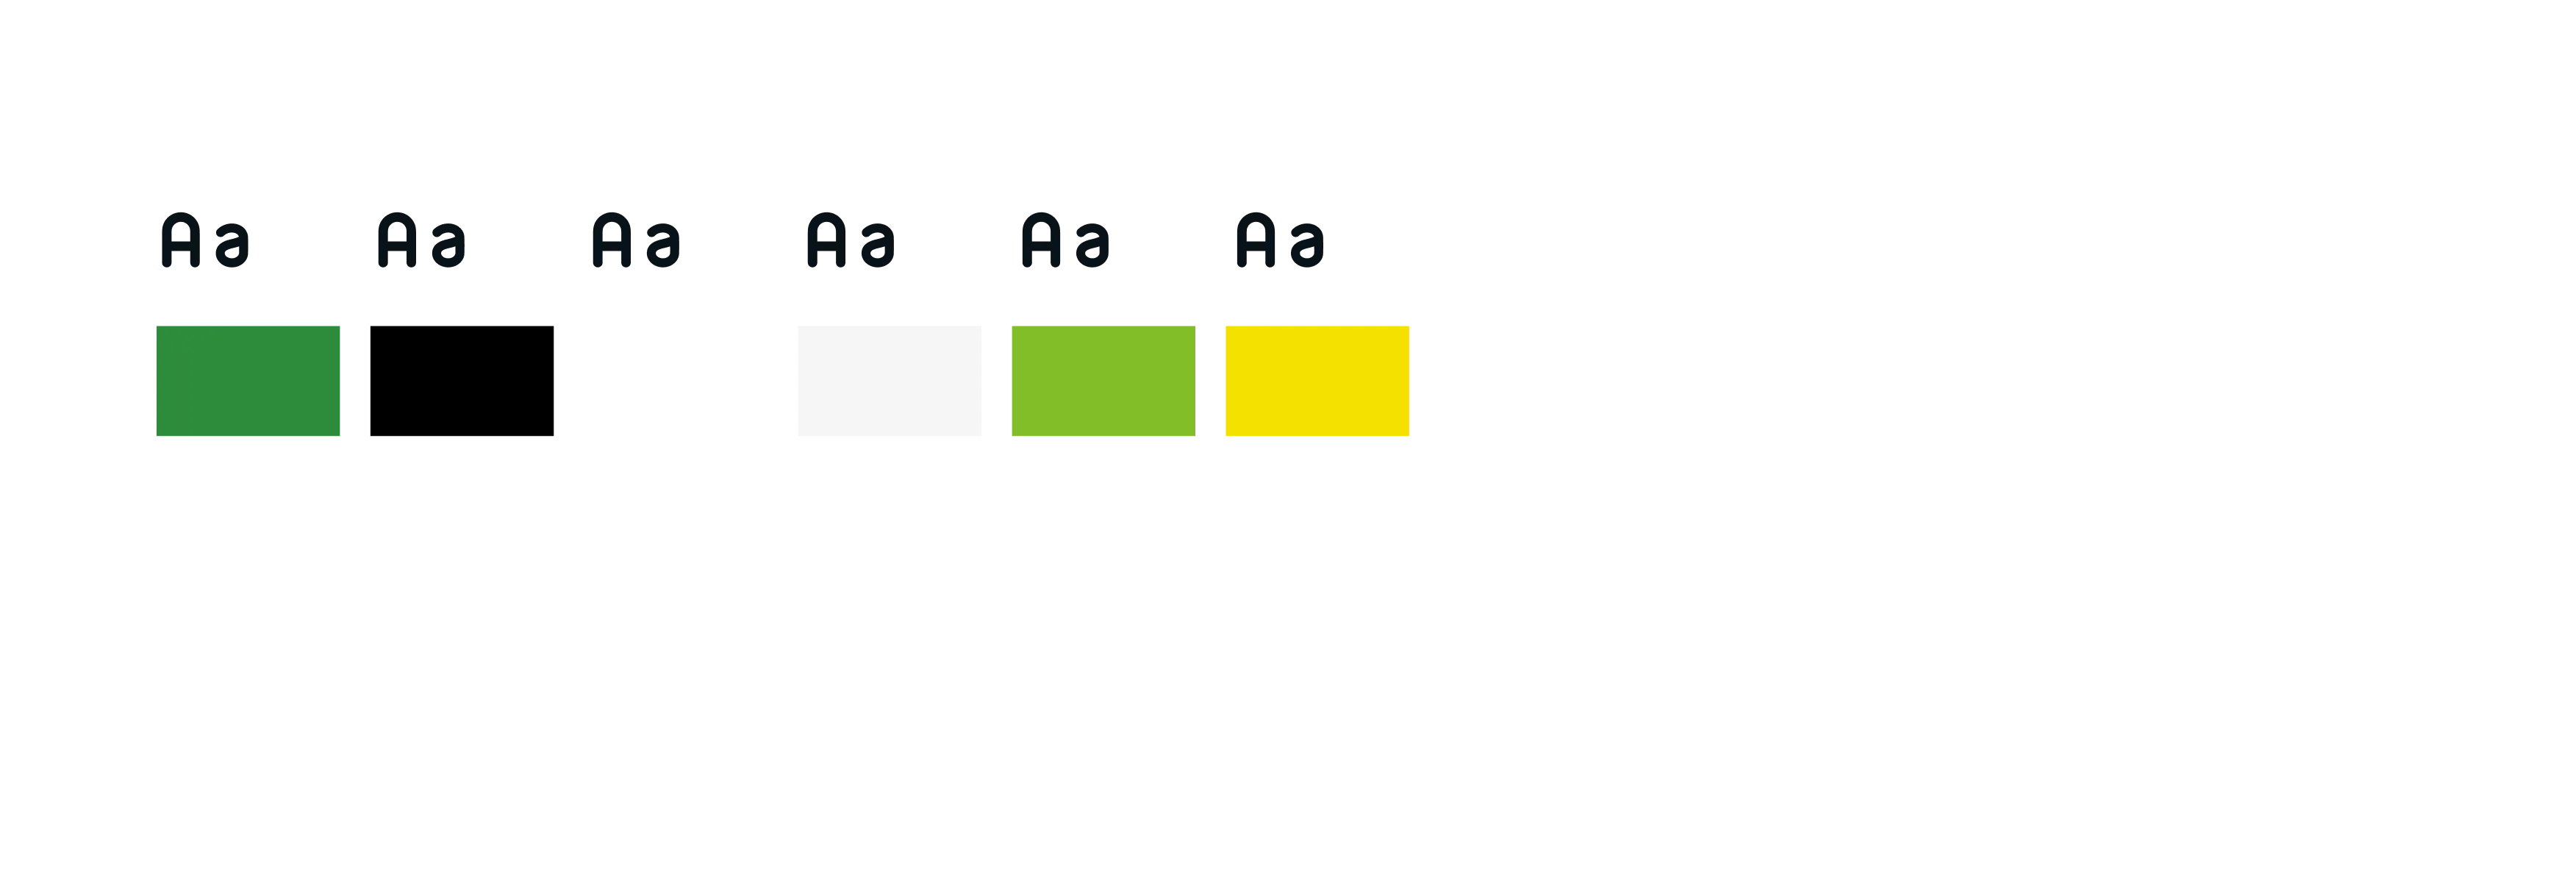 Amebaのブラン  ドカラー6種類。背景には2本の縄が描かれている。